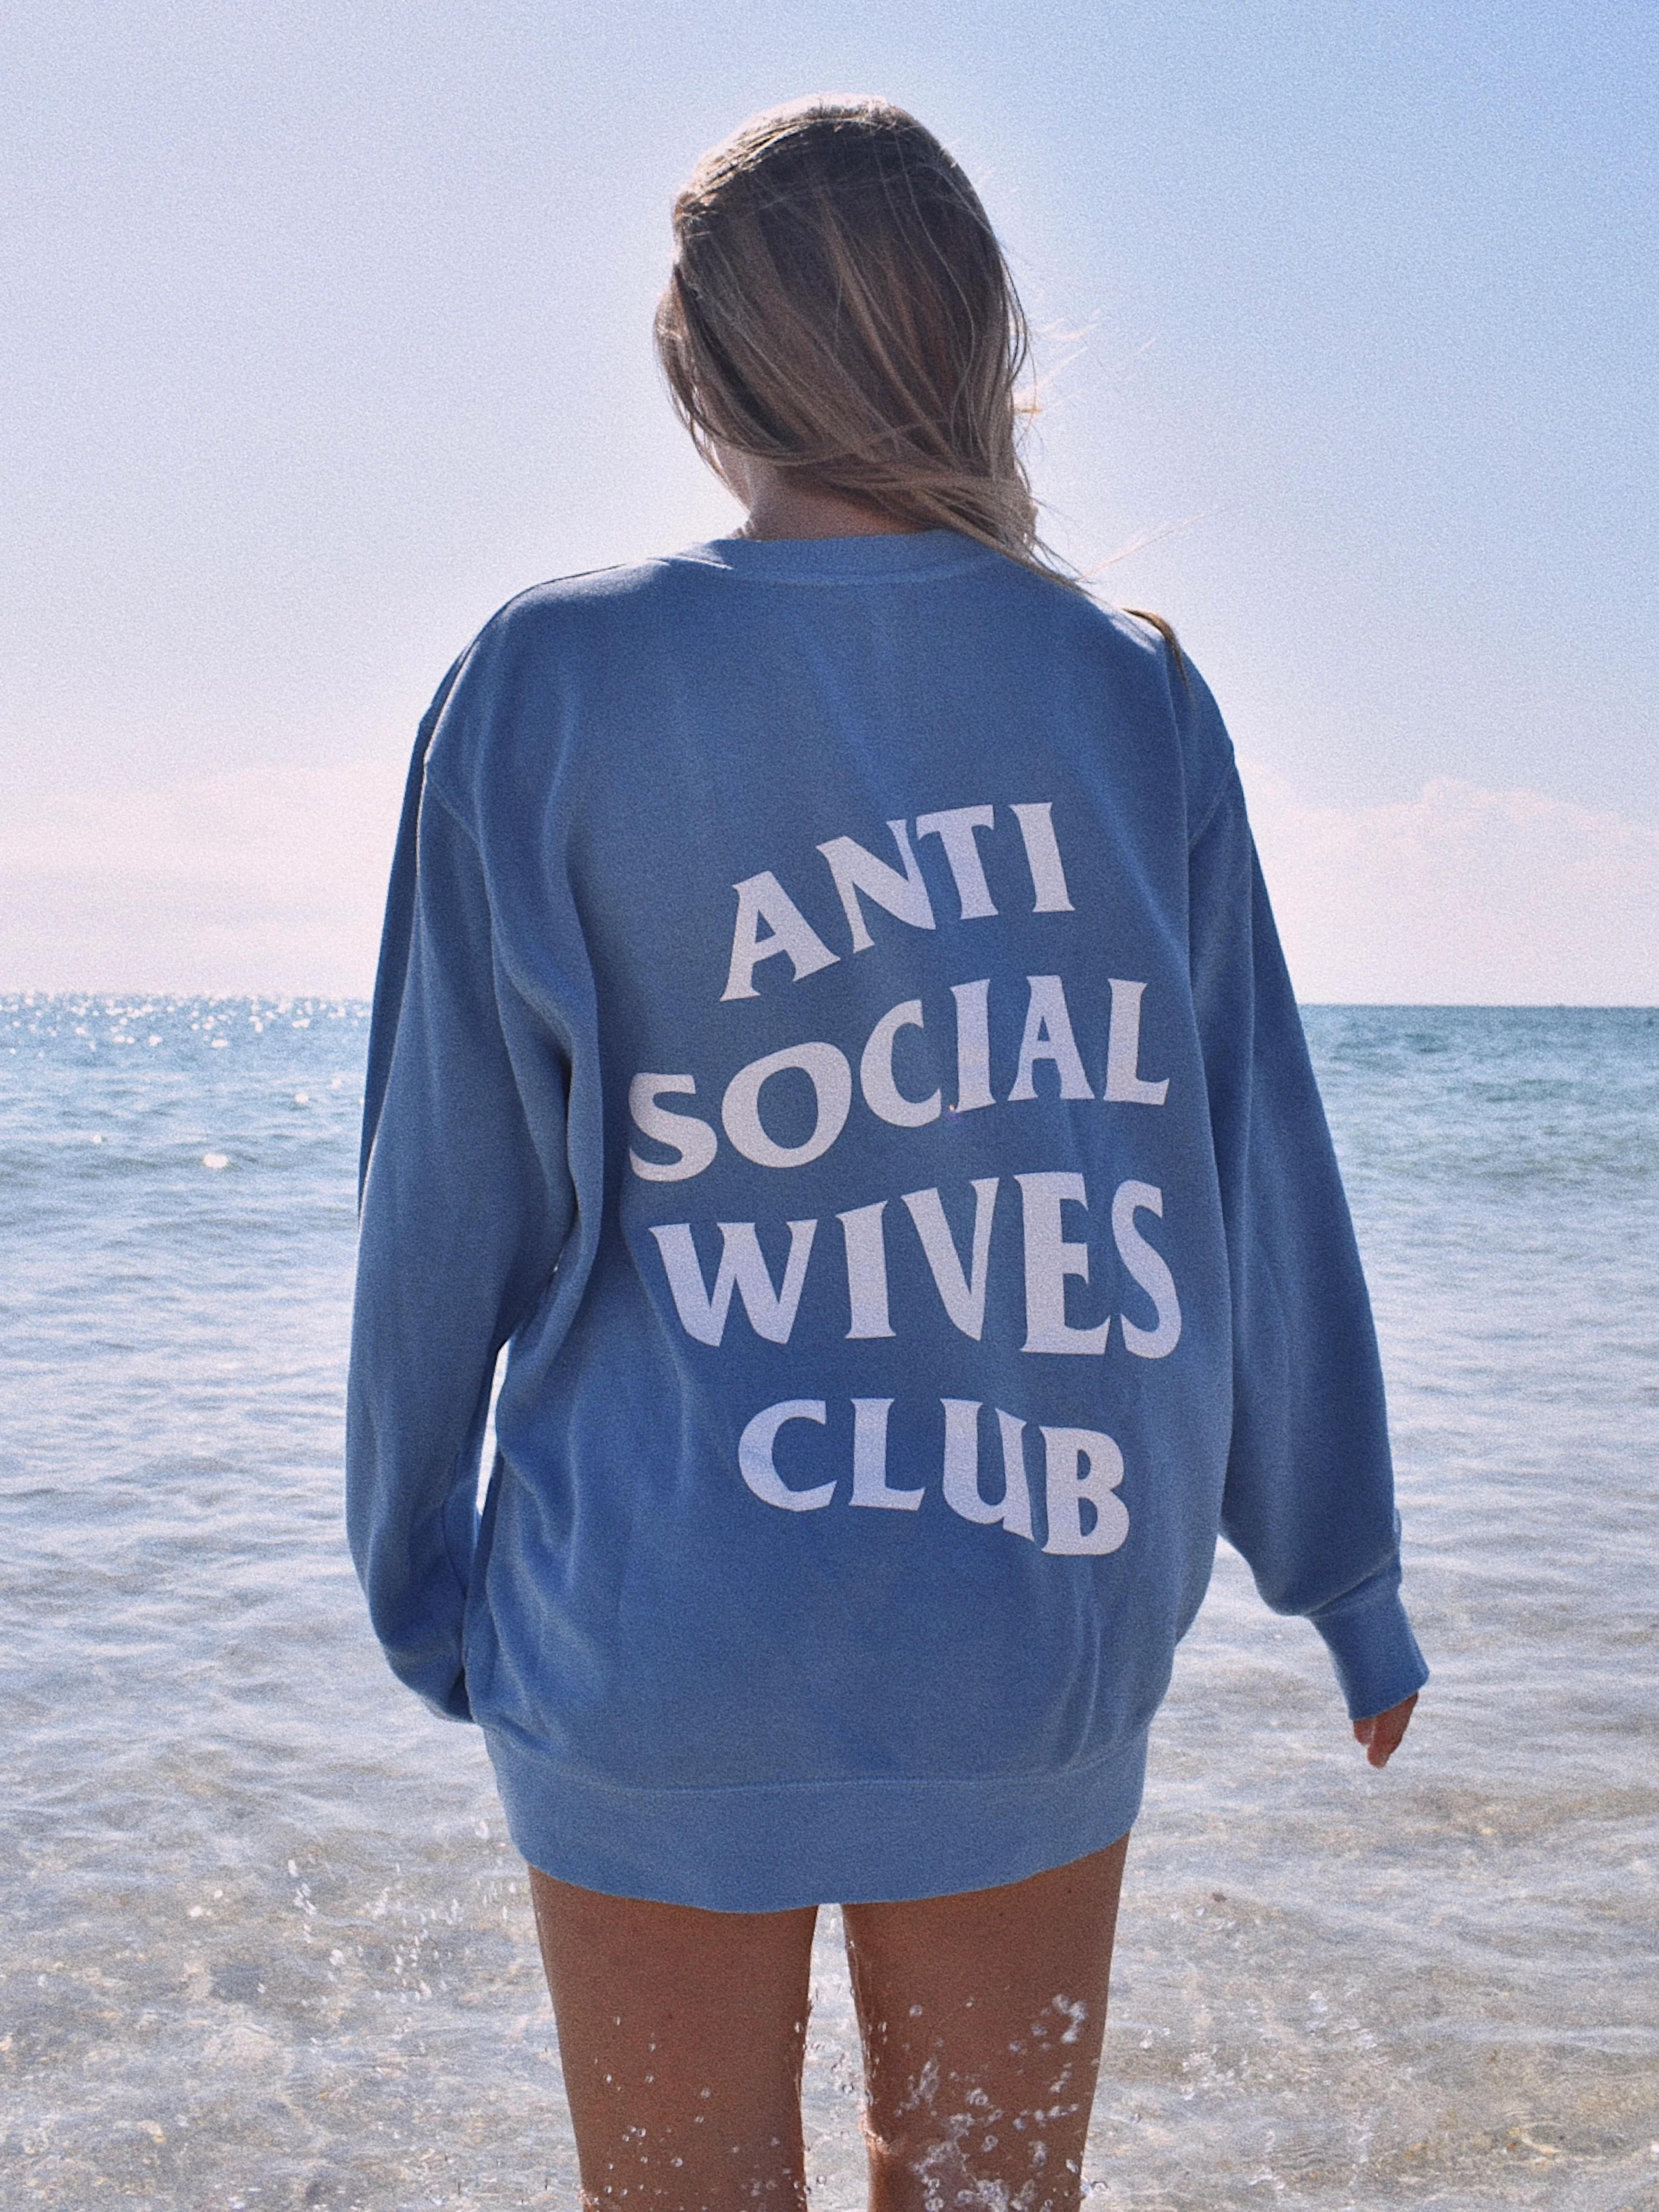 Antisocial Wives Club Crewneck